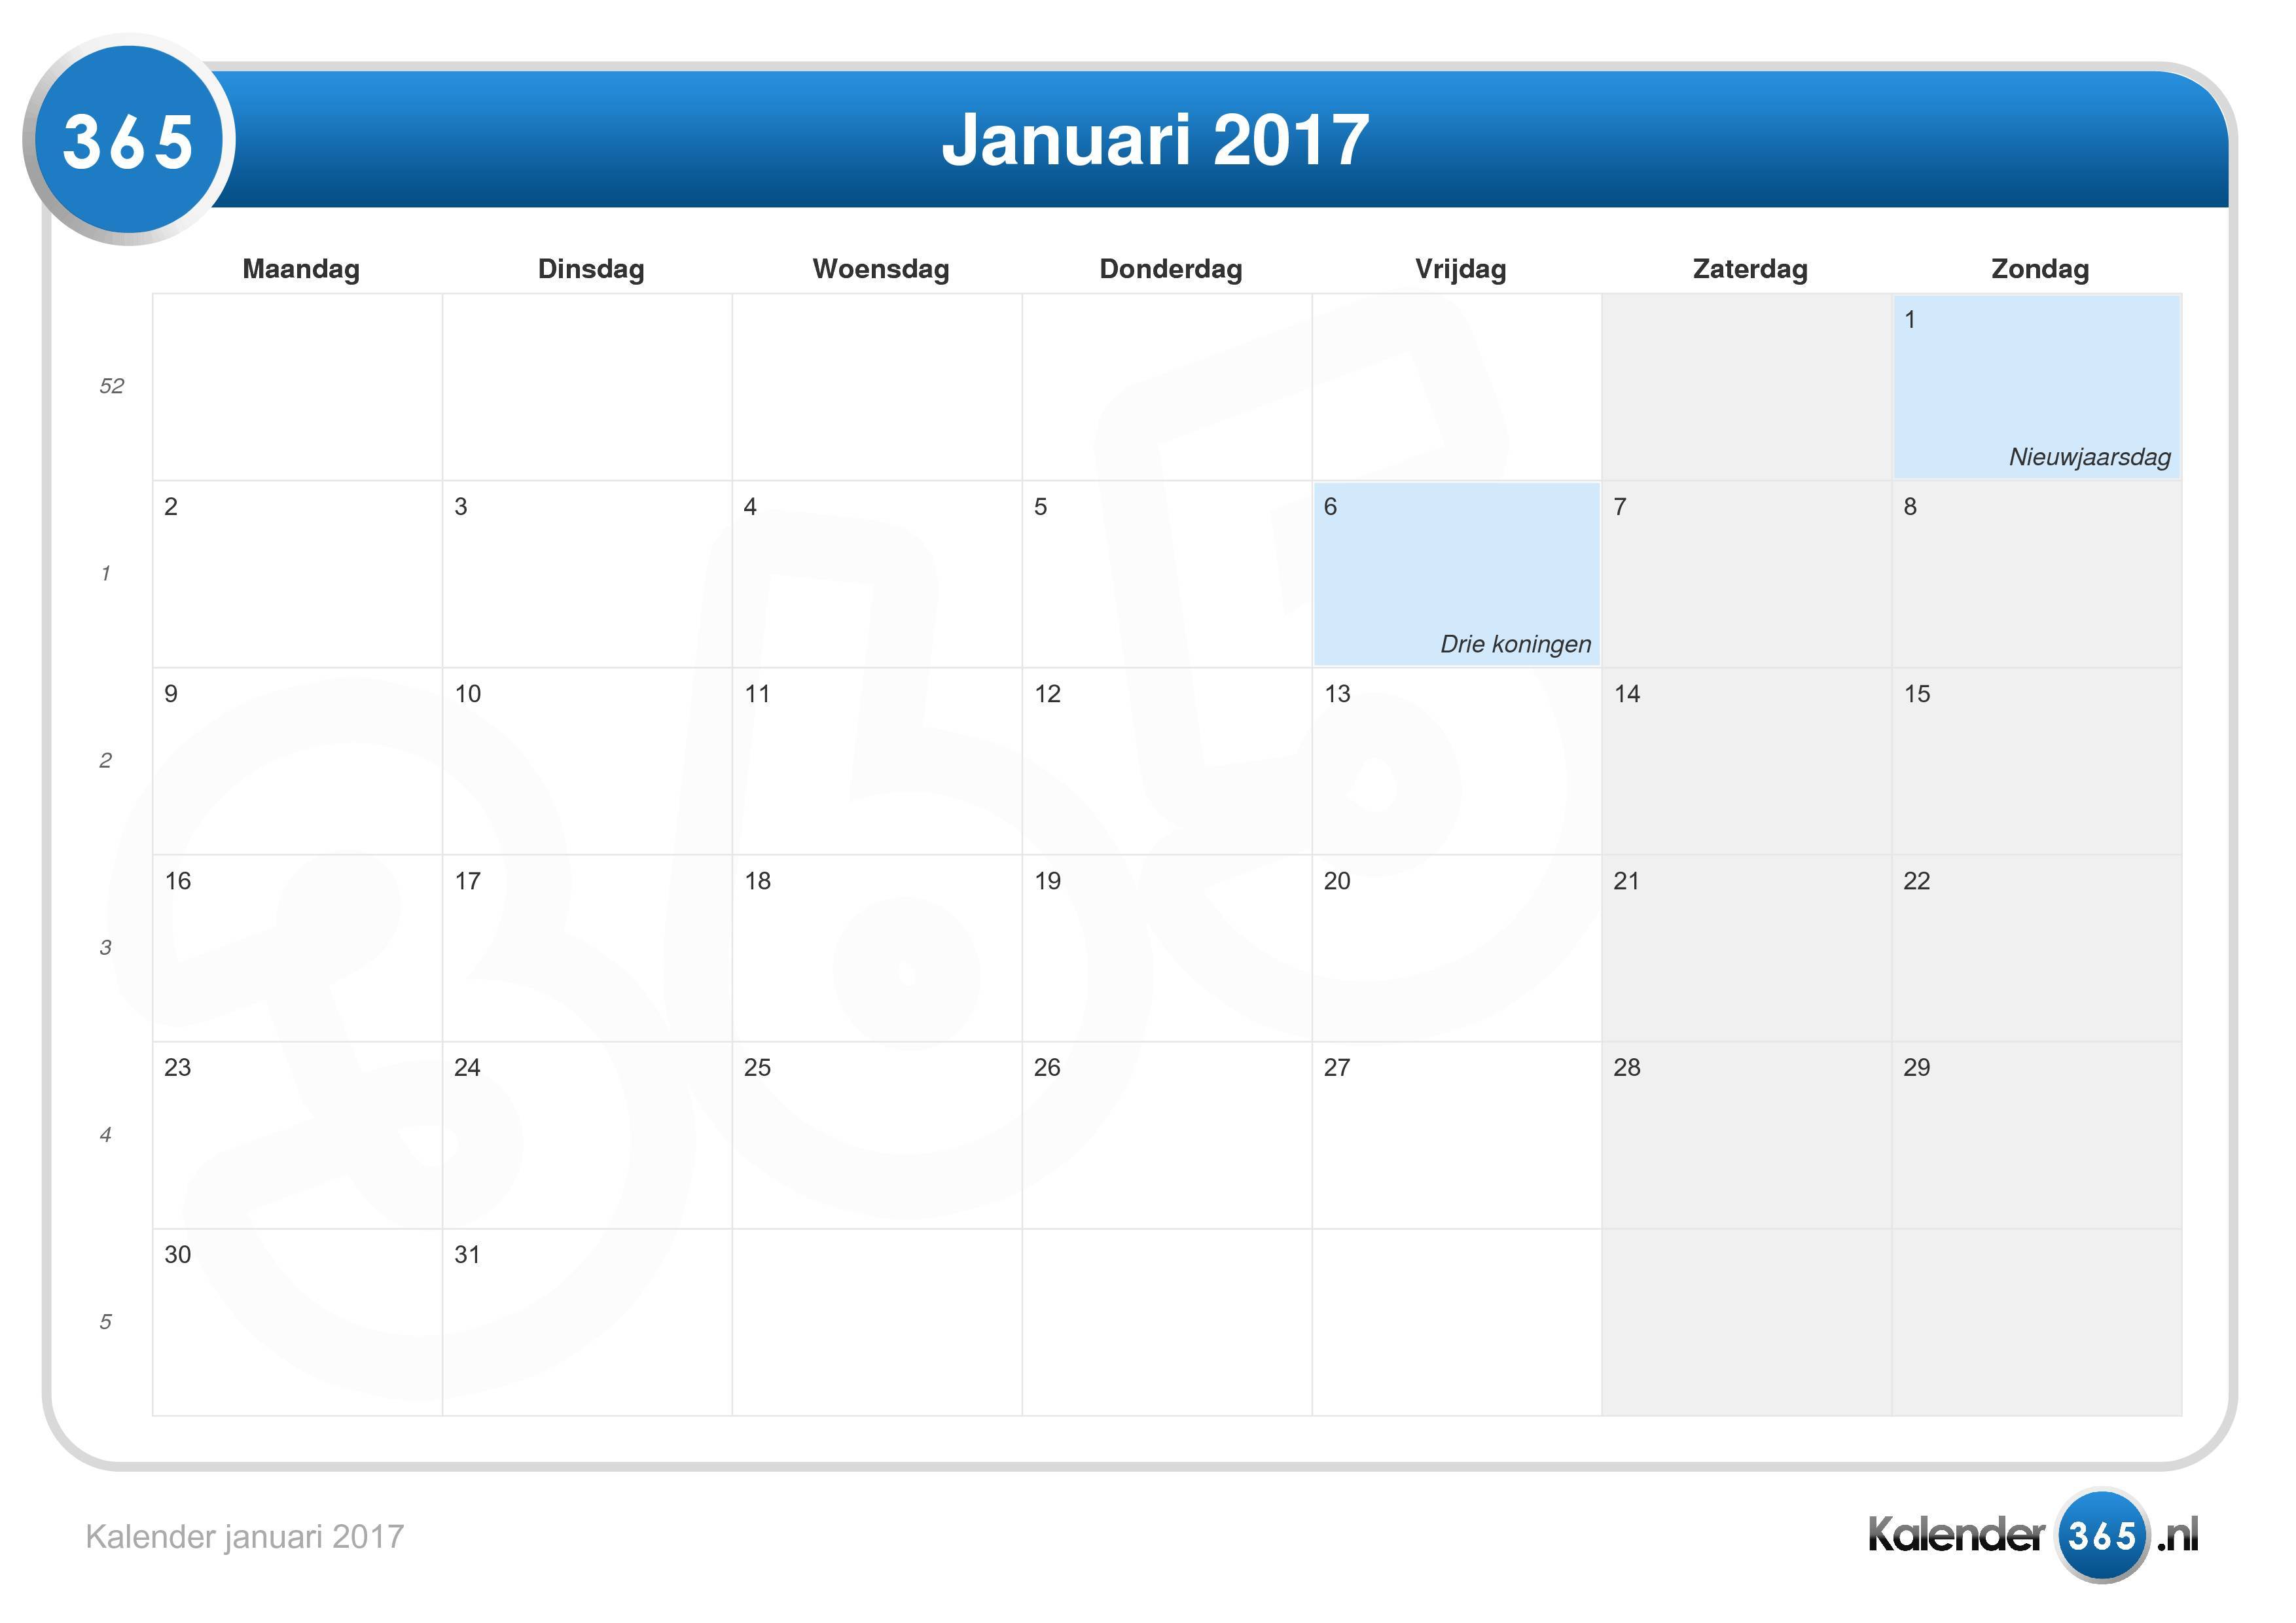 worst reservoir Zoekmachinemarketing Kalender januari 2017